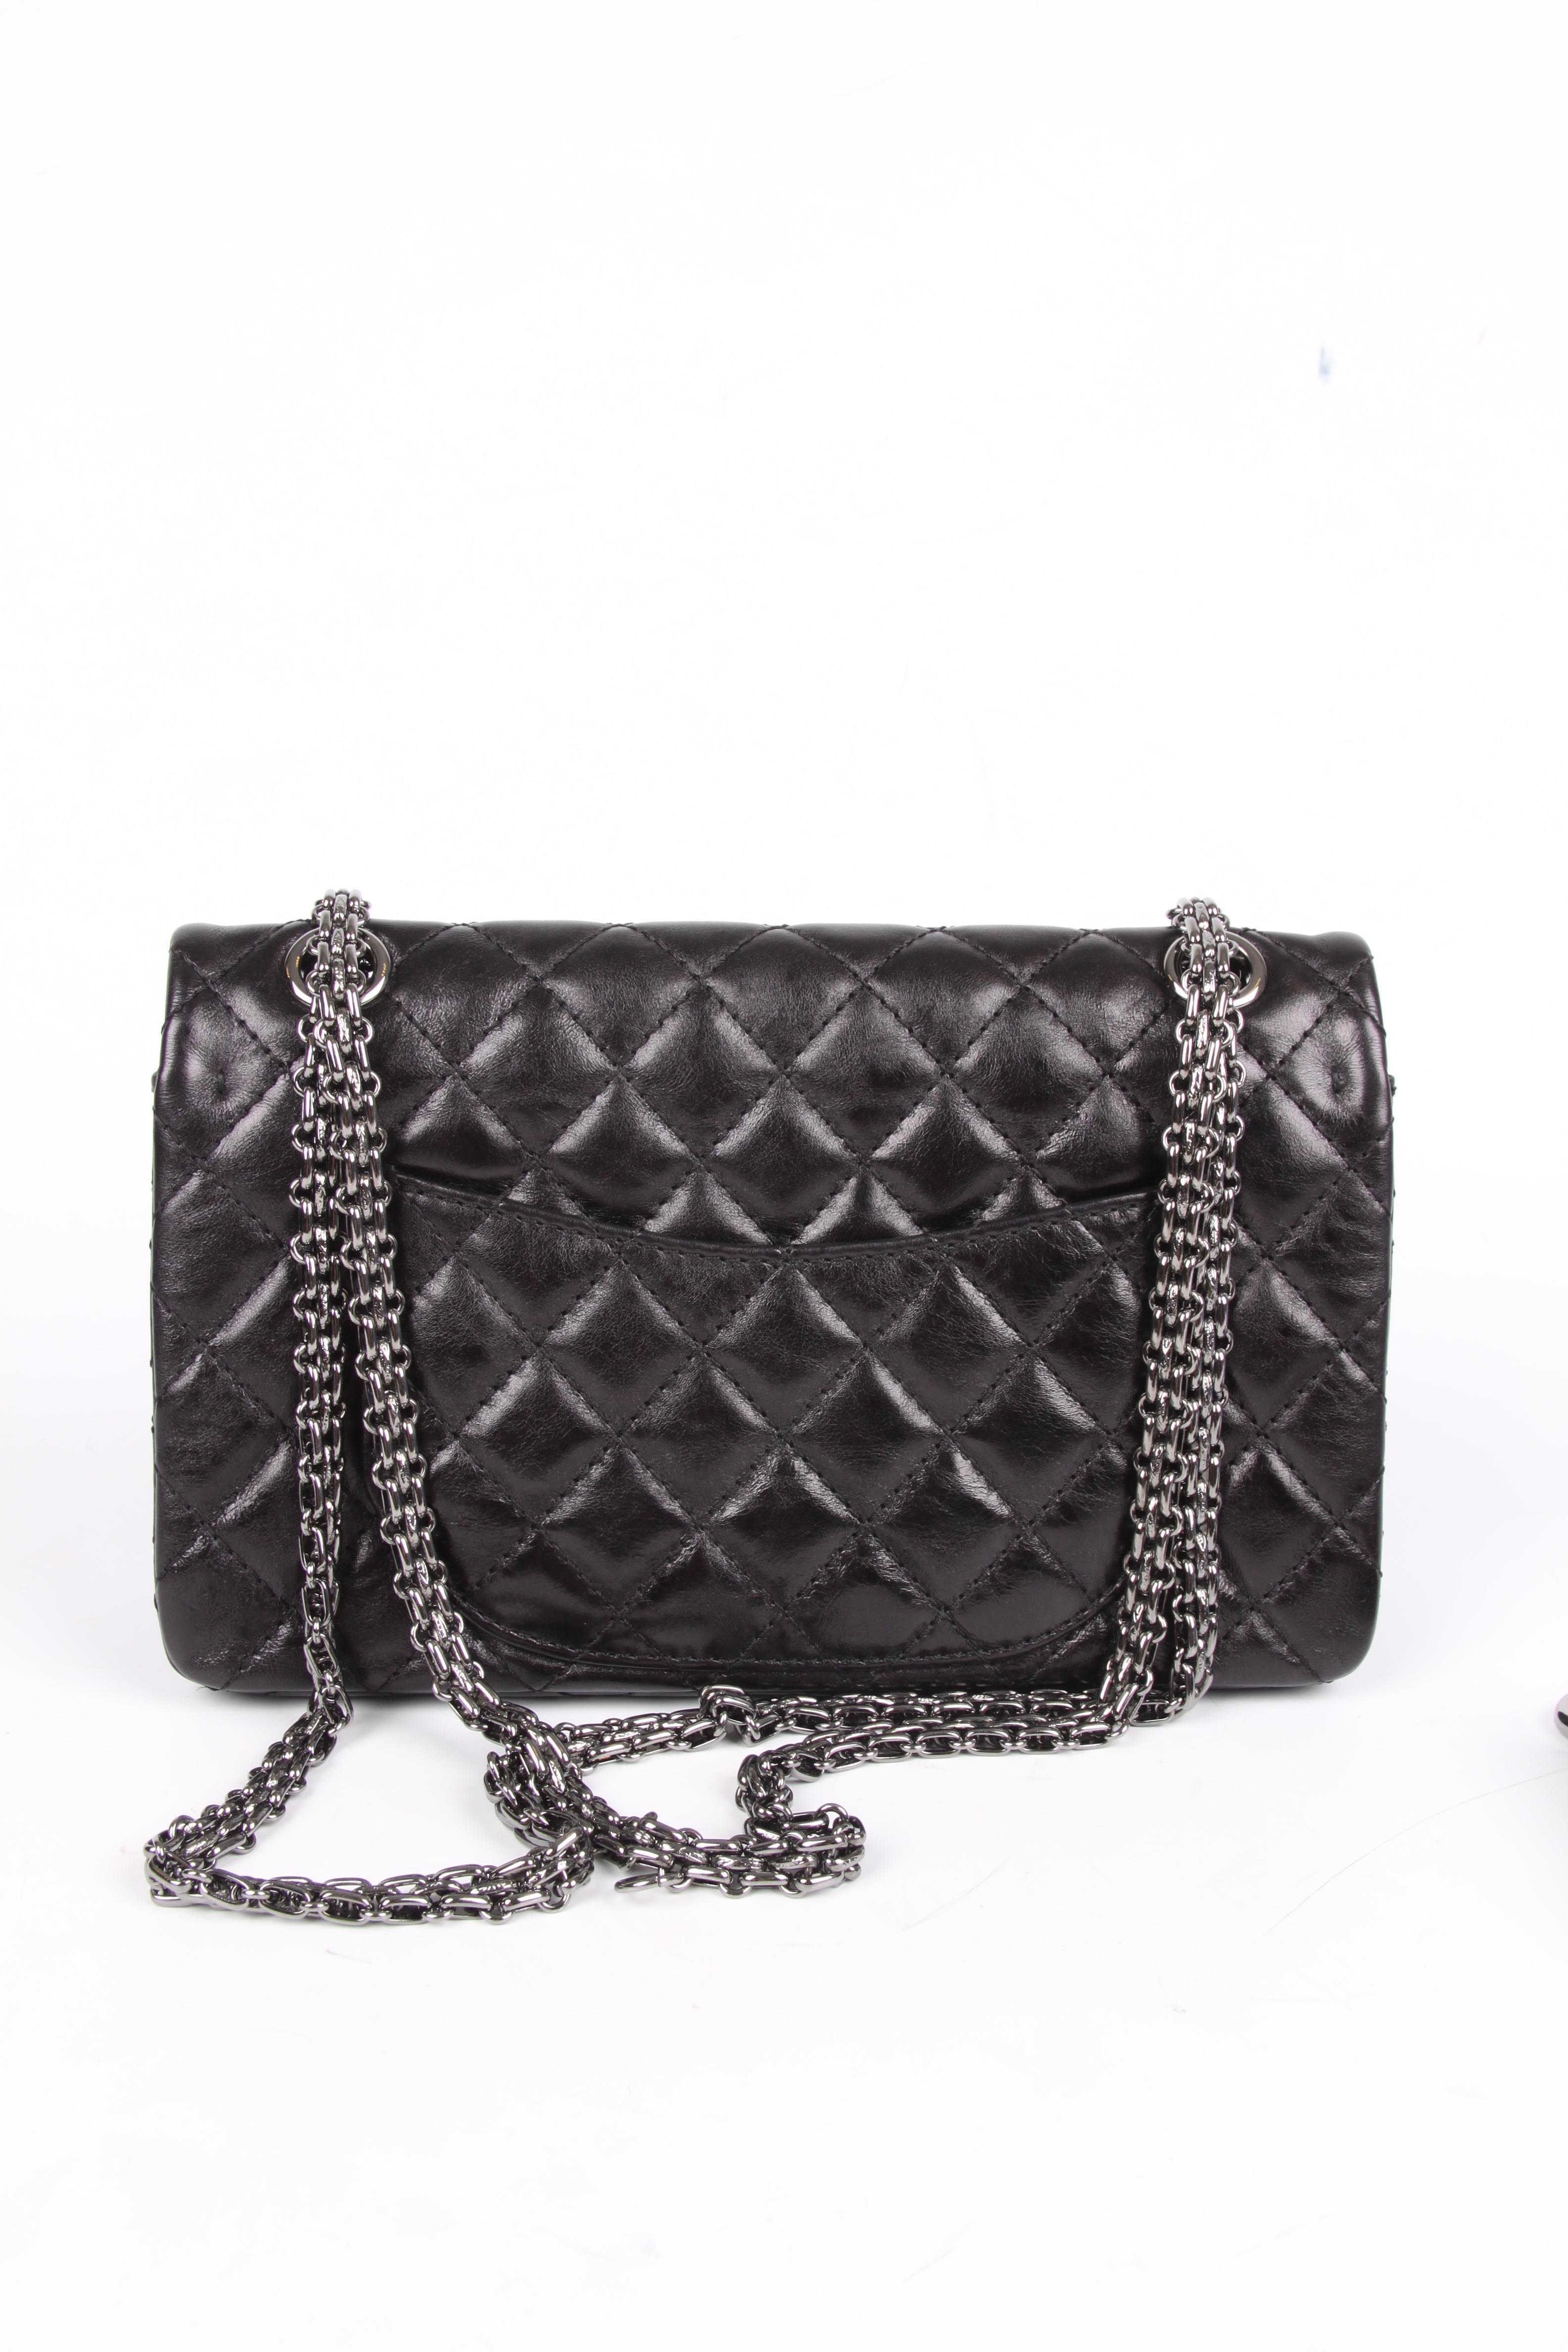 Black Chanel 2.55 Reissue Double Flap Bag with Mini Pochette - black